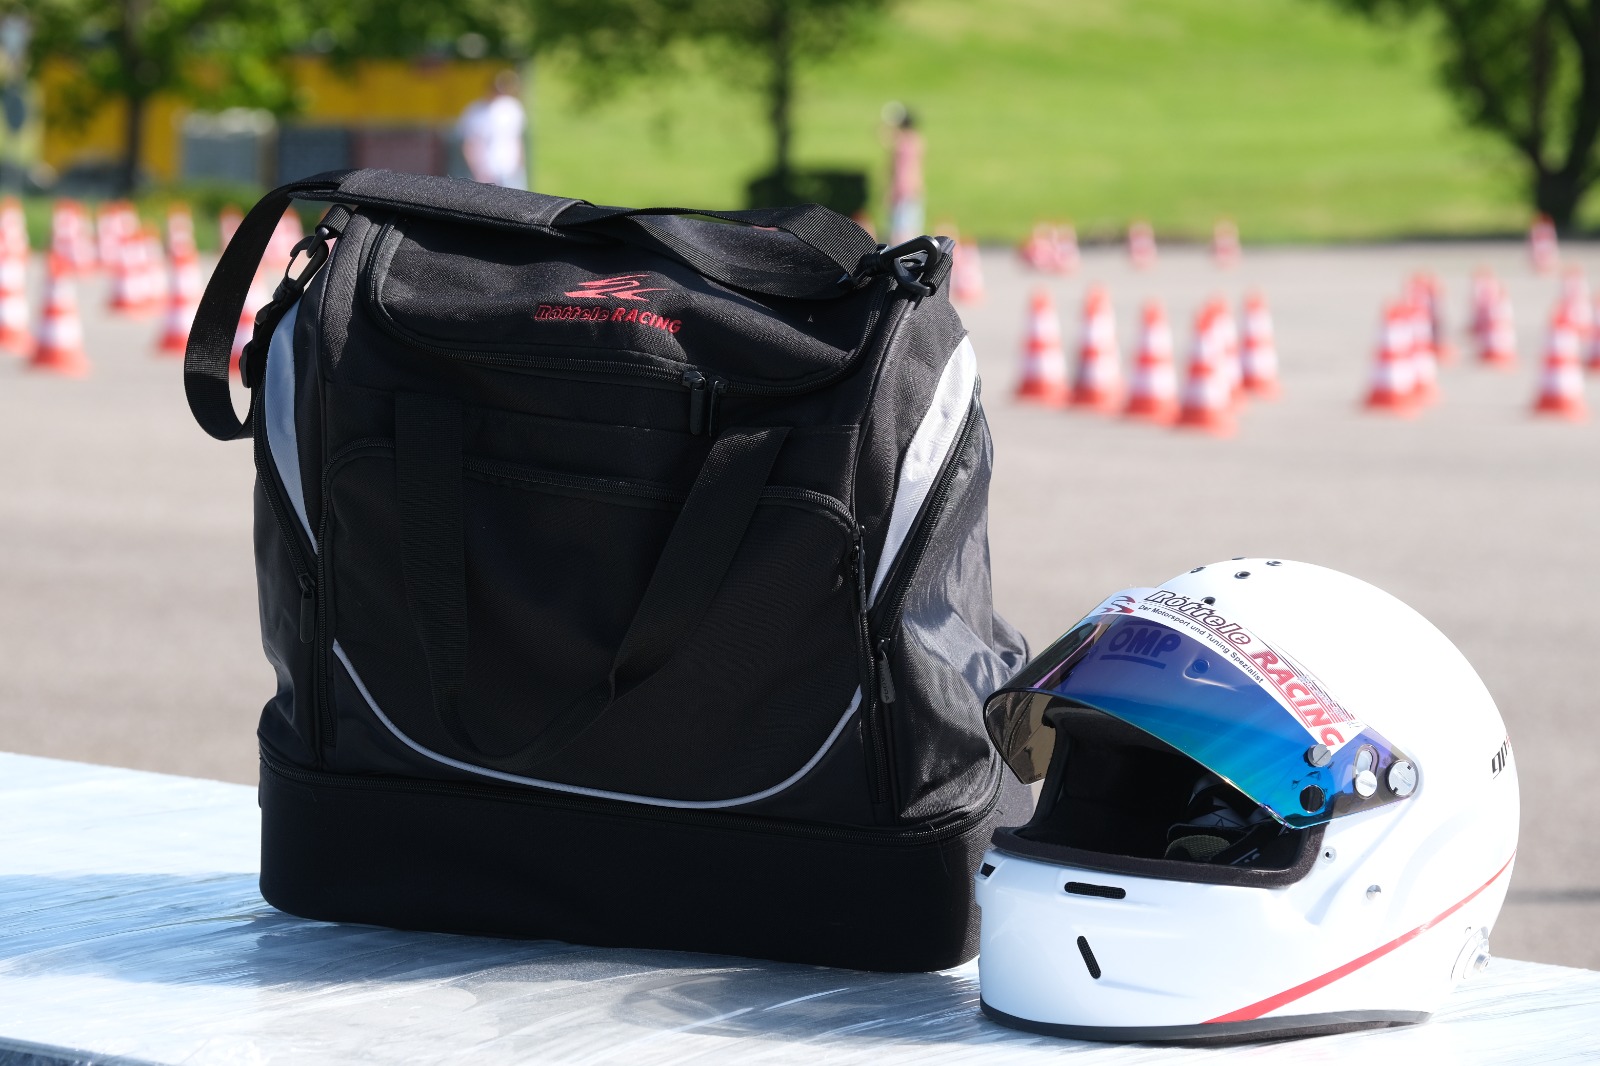 https://roettele-racing.de/media/image/85/4e/ca/Helmtasche-und-Helmaufkleber2.jpg